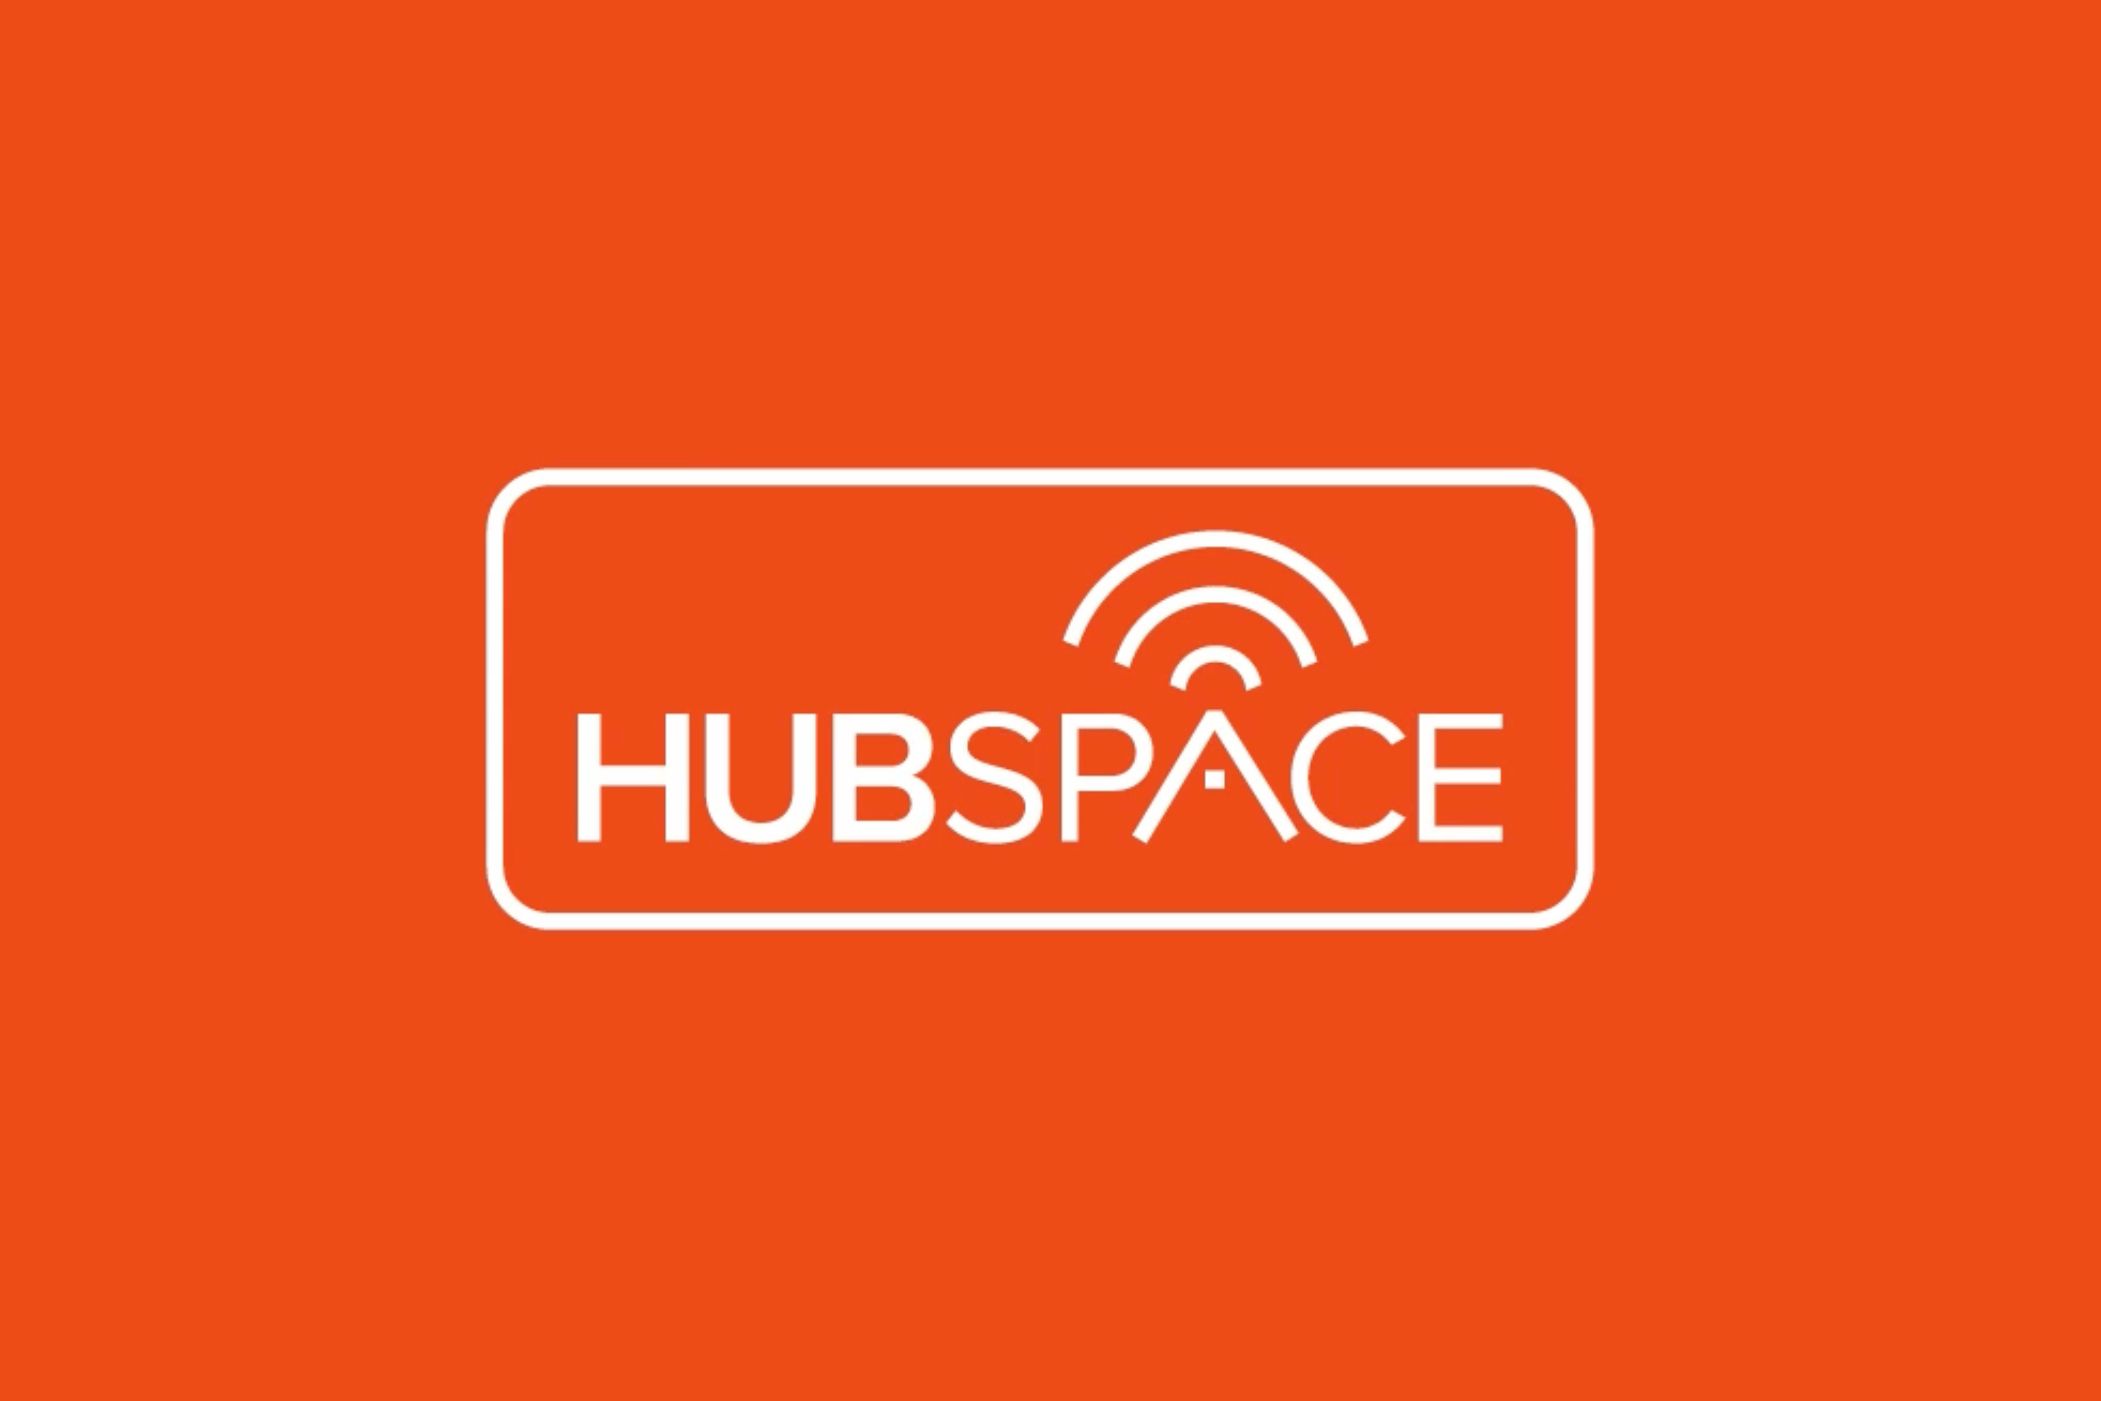 Home Depot's Hubspace brand logo.